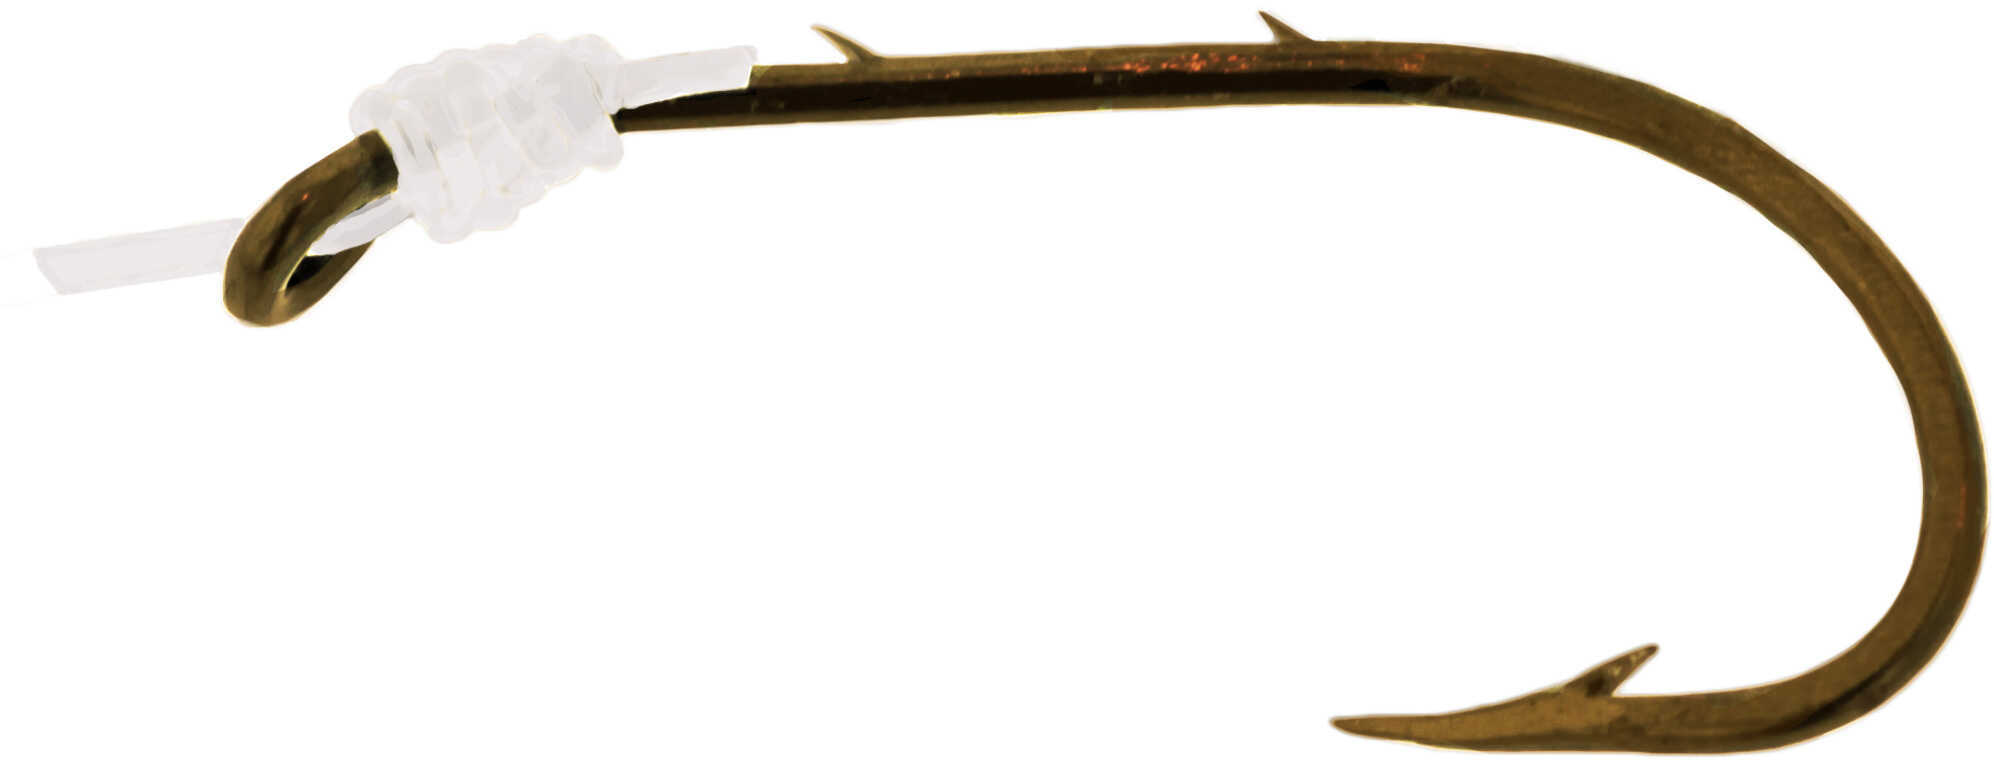 Eagle Claw Fishing Tackle Snelled Hook Bronze Baitholder 24/ctn 139-2